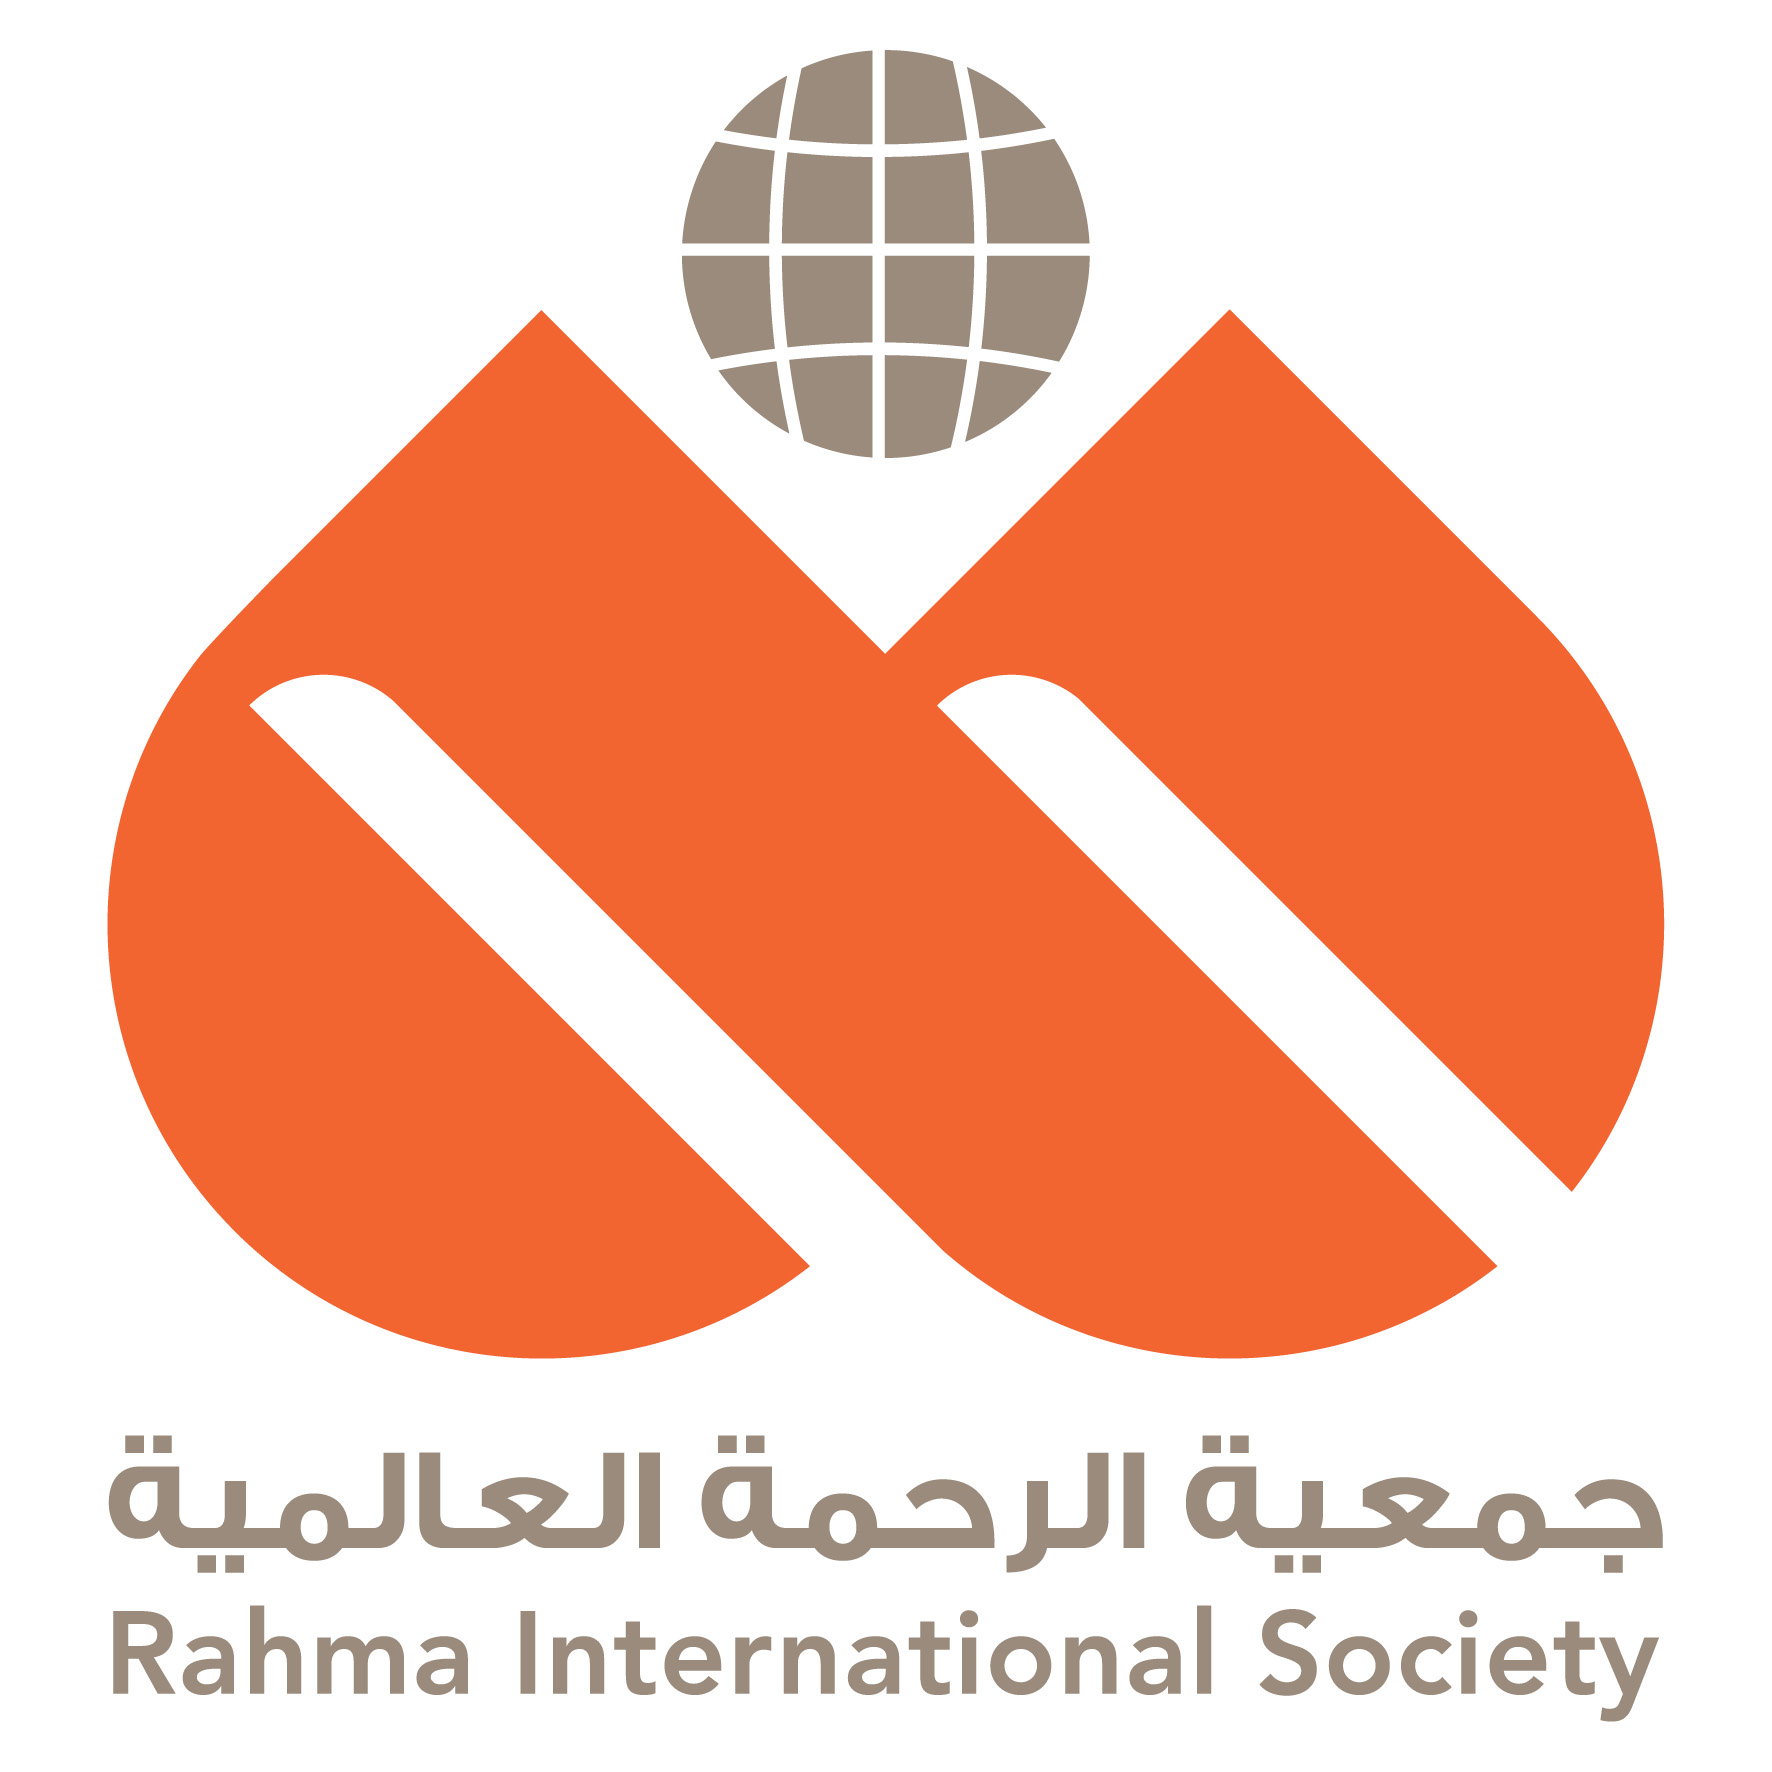 Rahma International Society